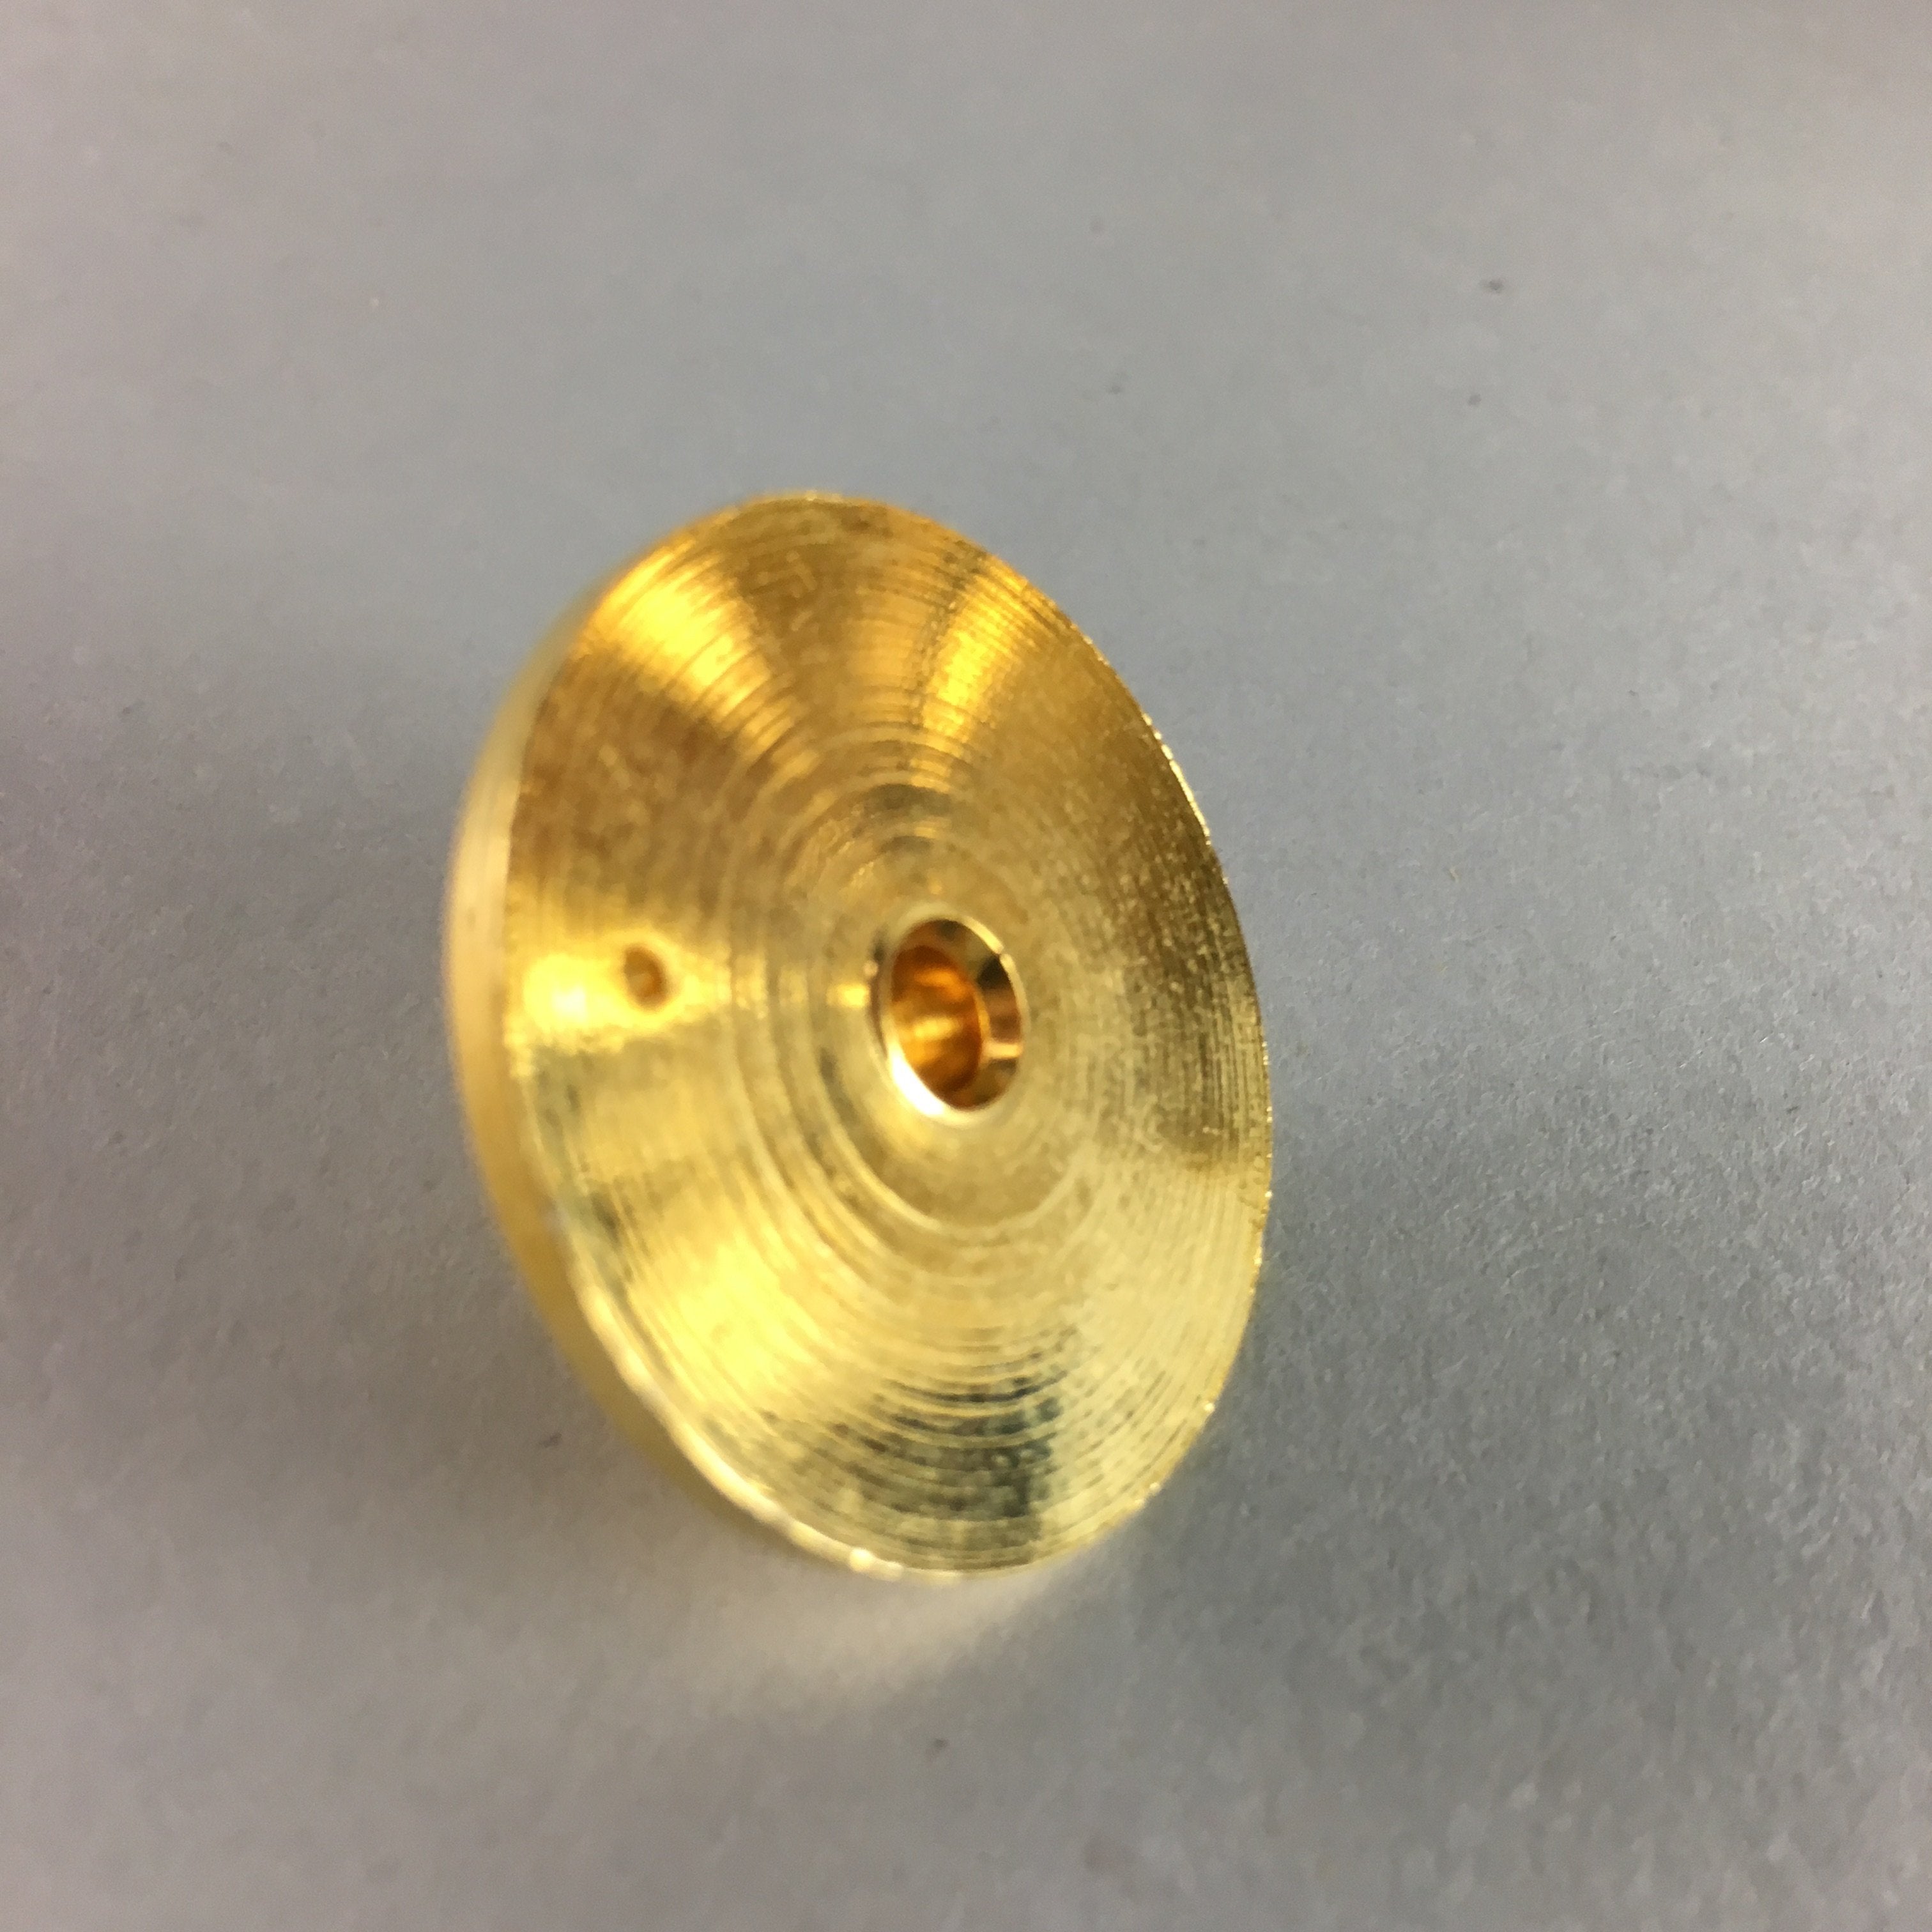 Japanese Gold Plated Metal Kettle Vtg Display Chagama Ornament Okimono BD473